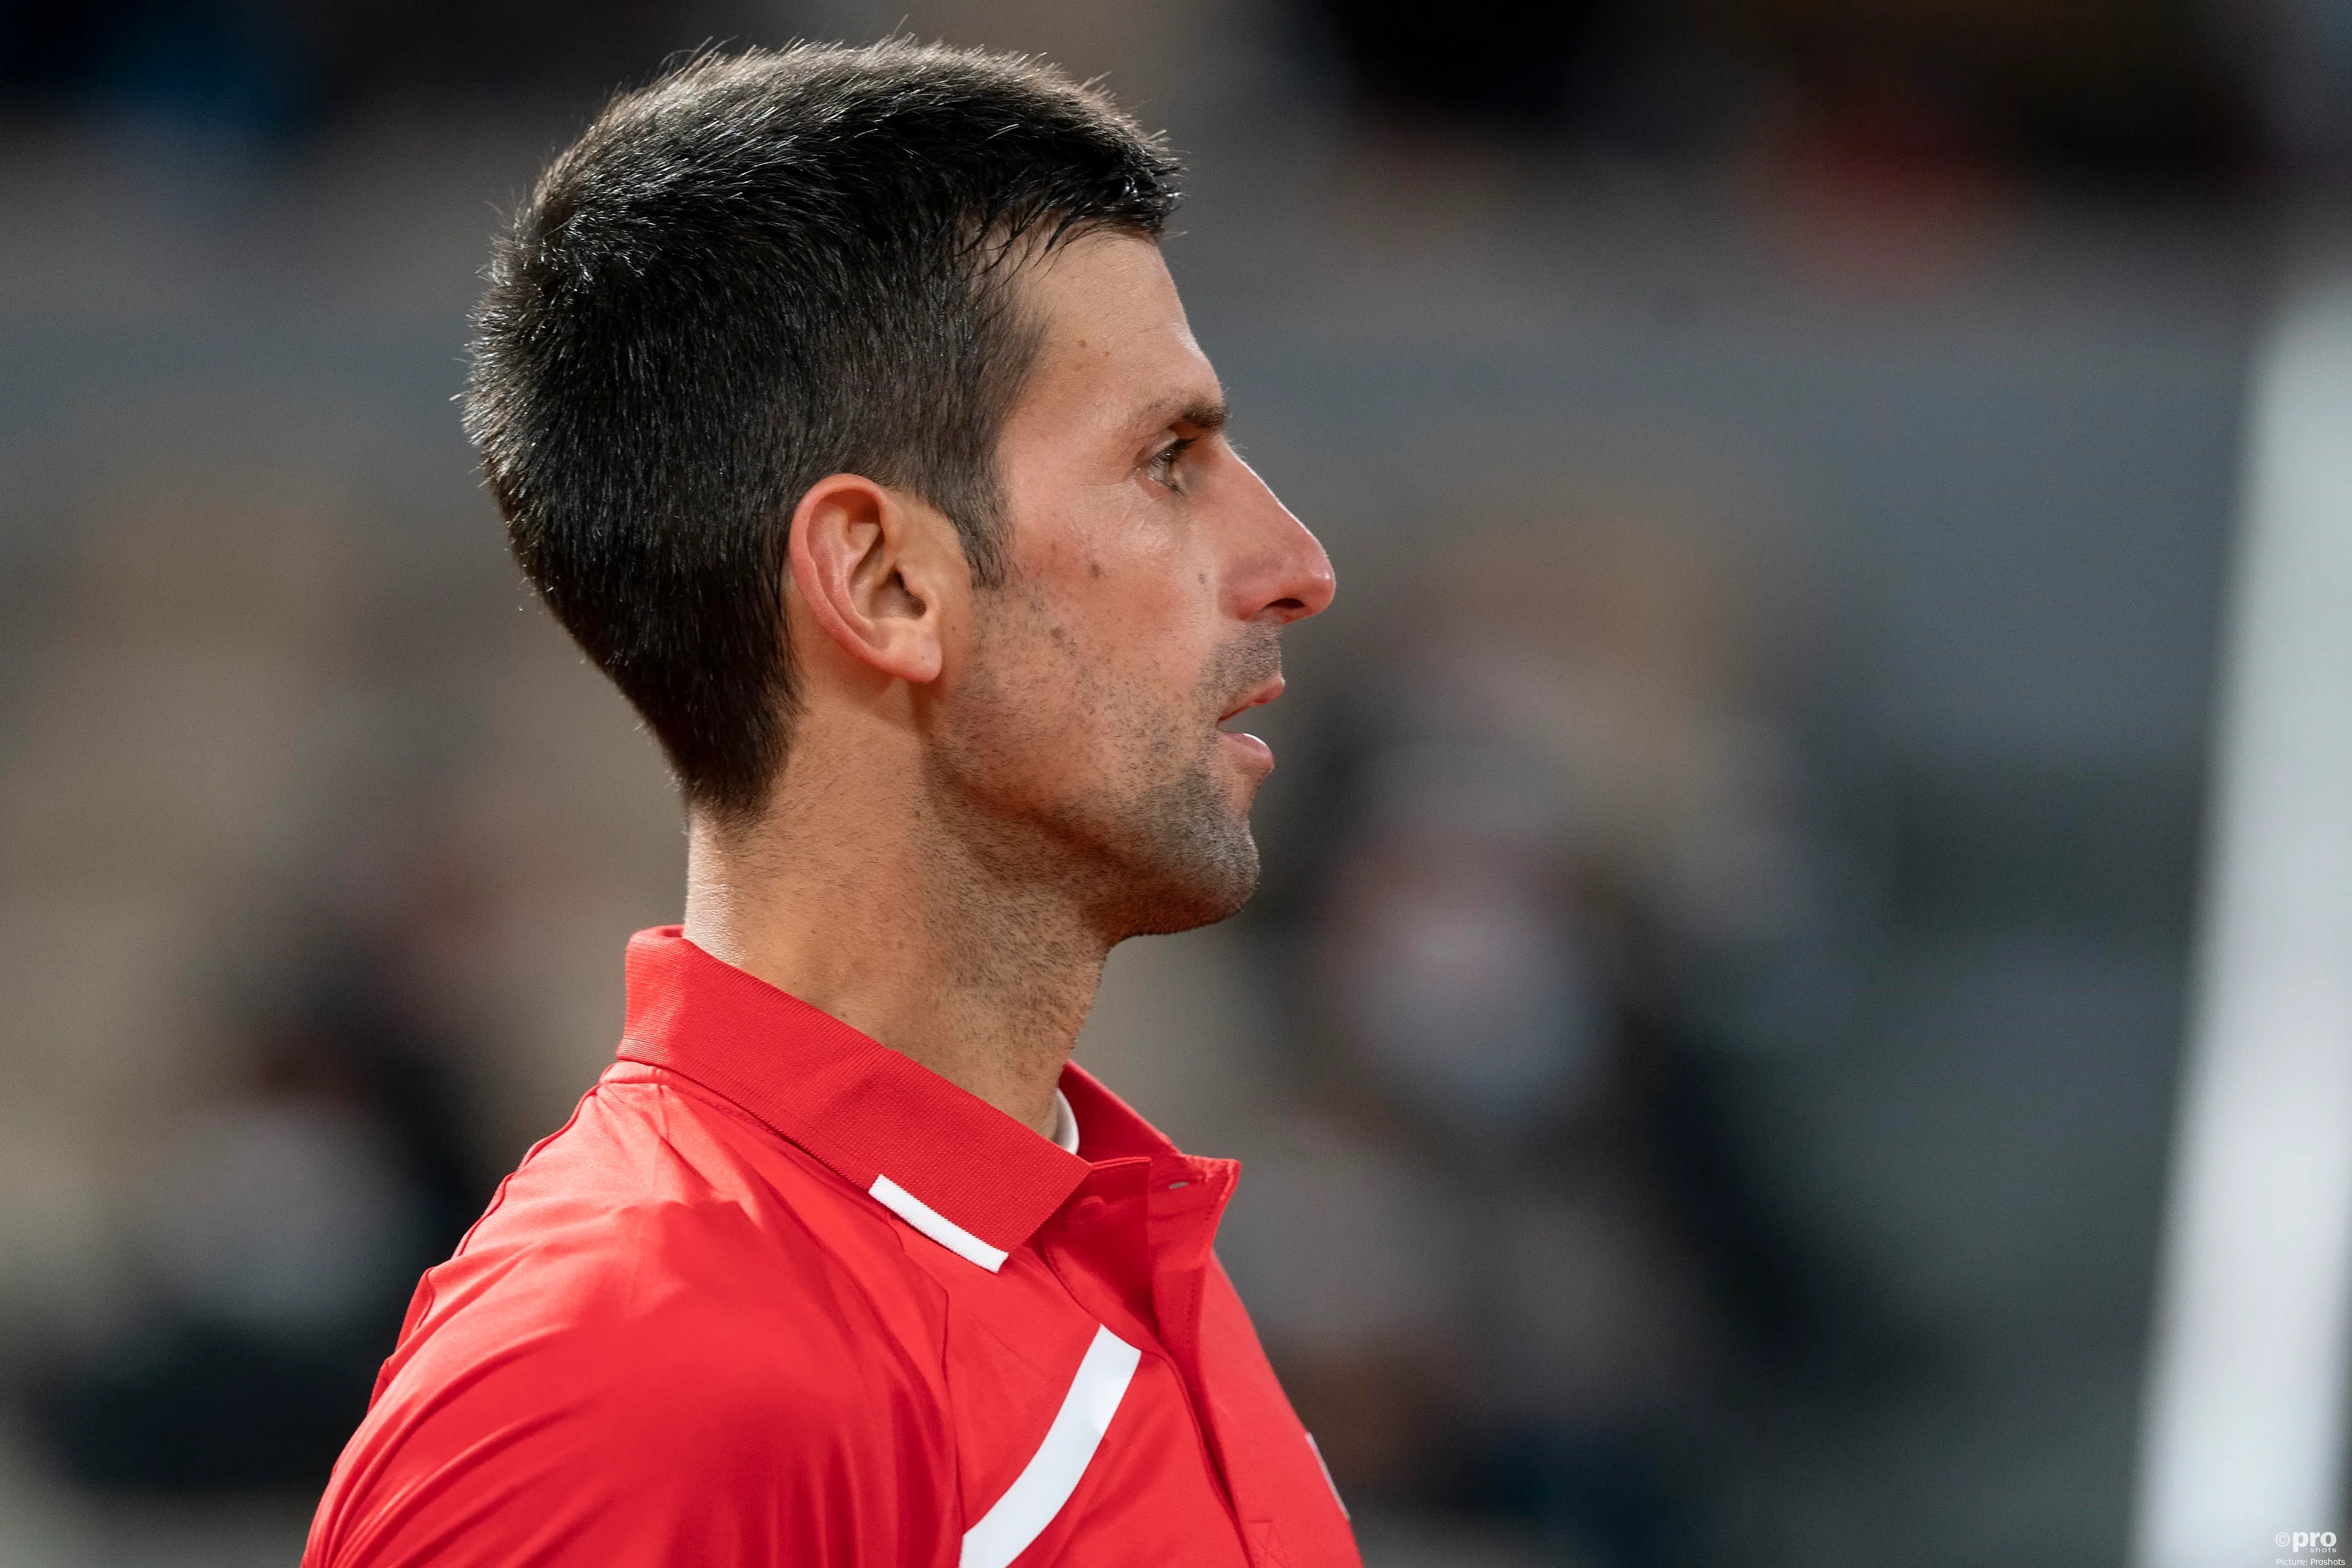 Novak Djokovic Roland Garros 2020 3 5f7d8c03b2118